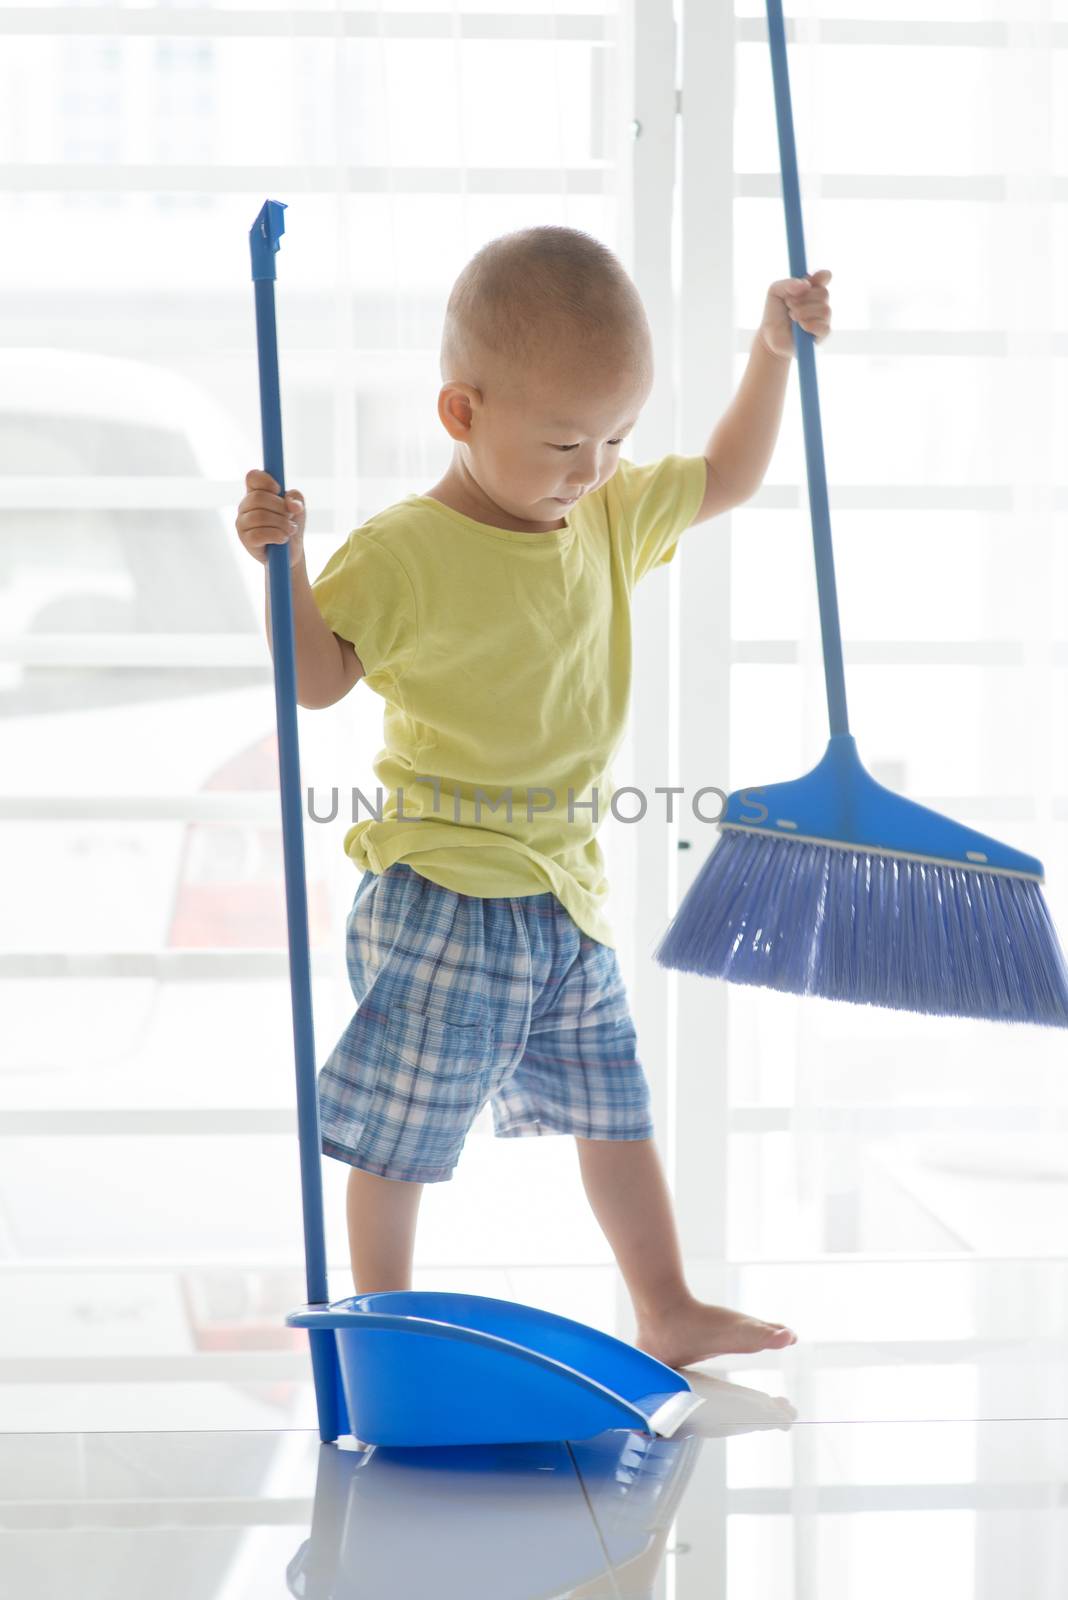 Toddler sweeping floor by szefei